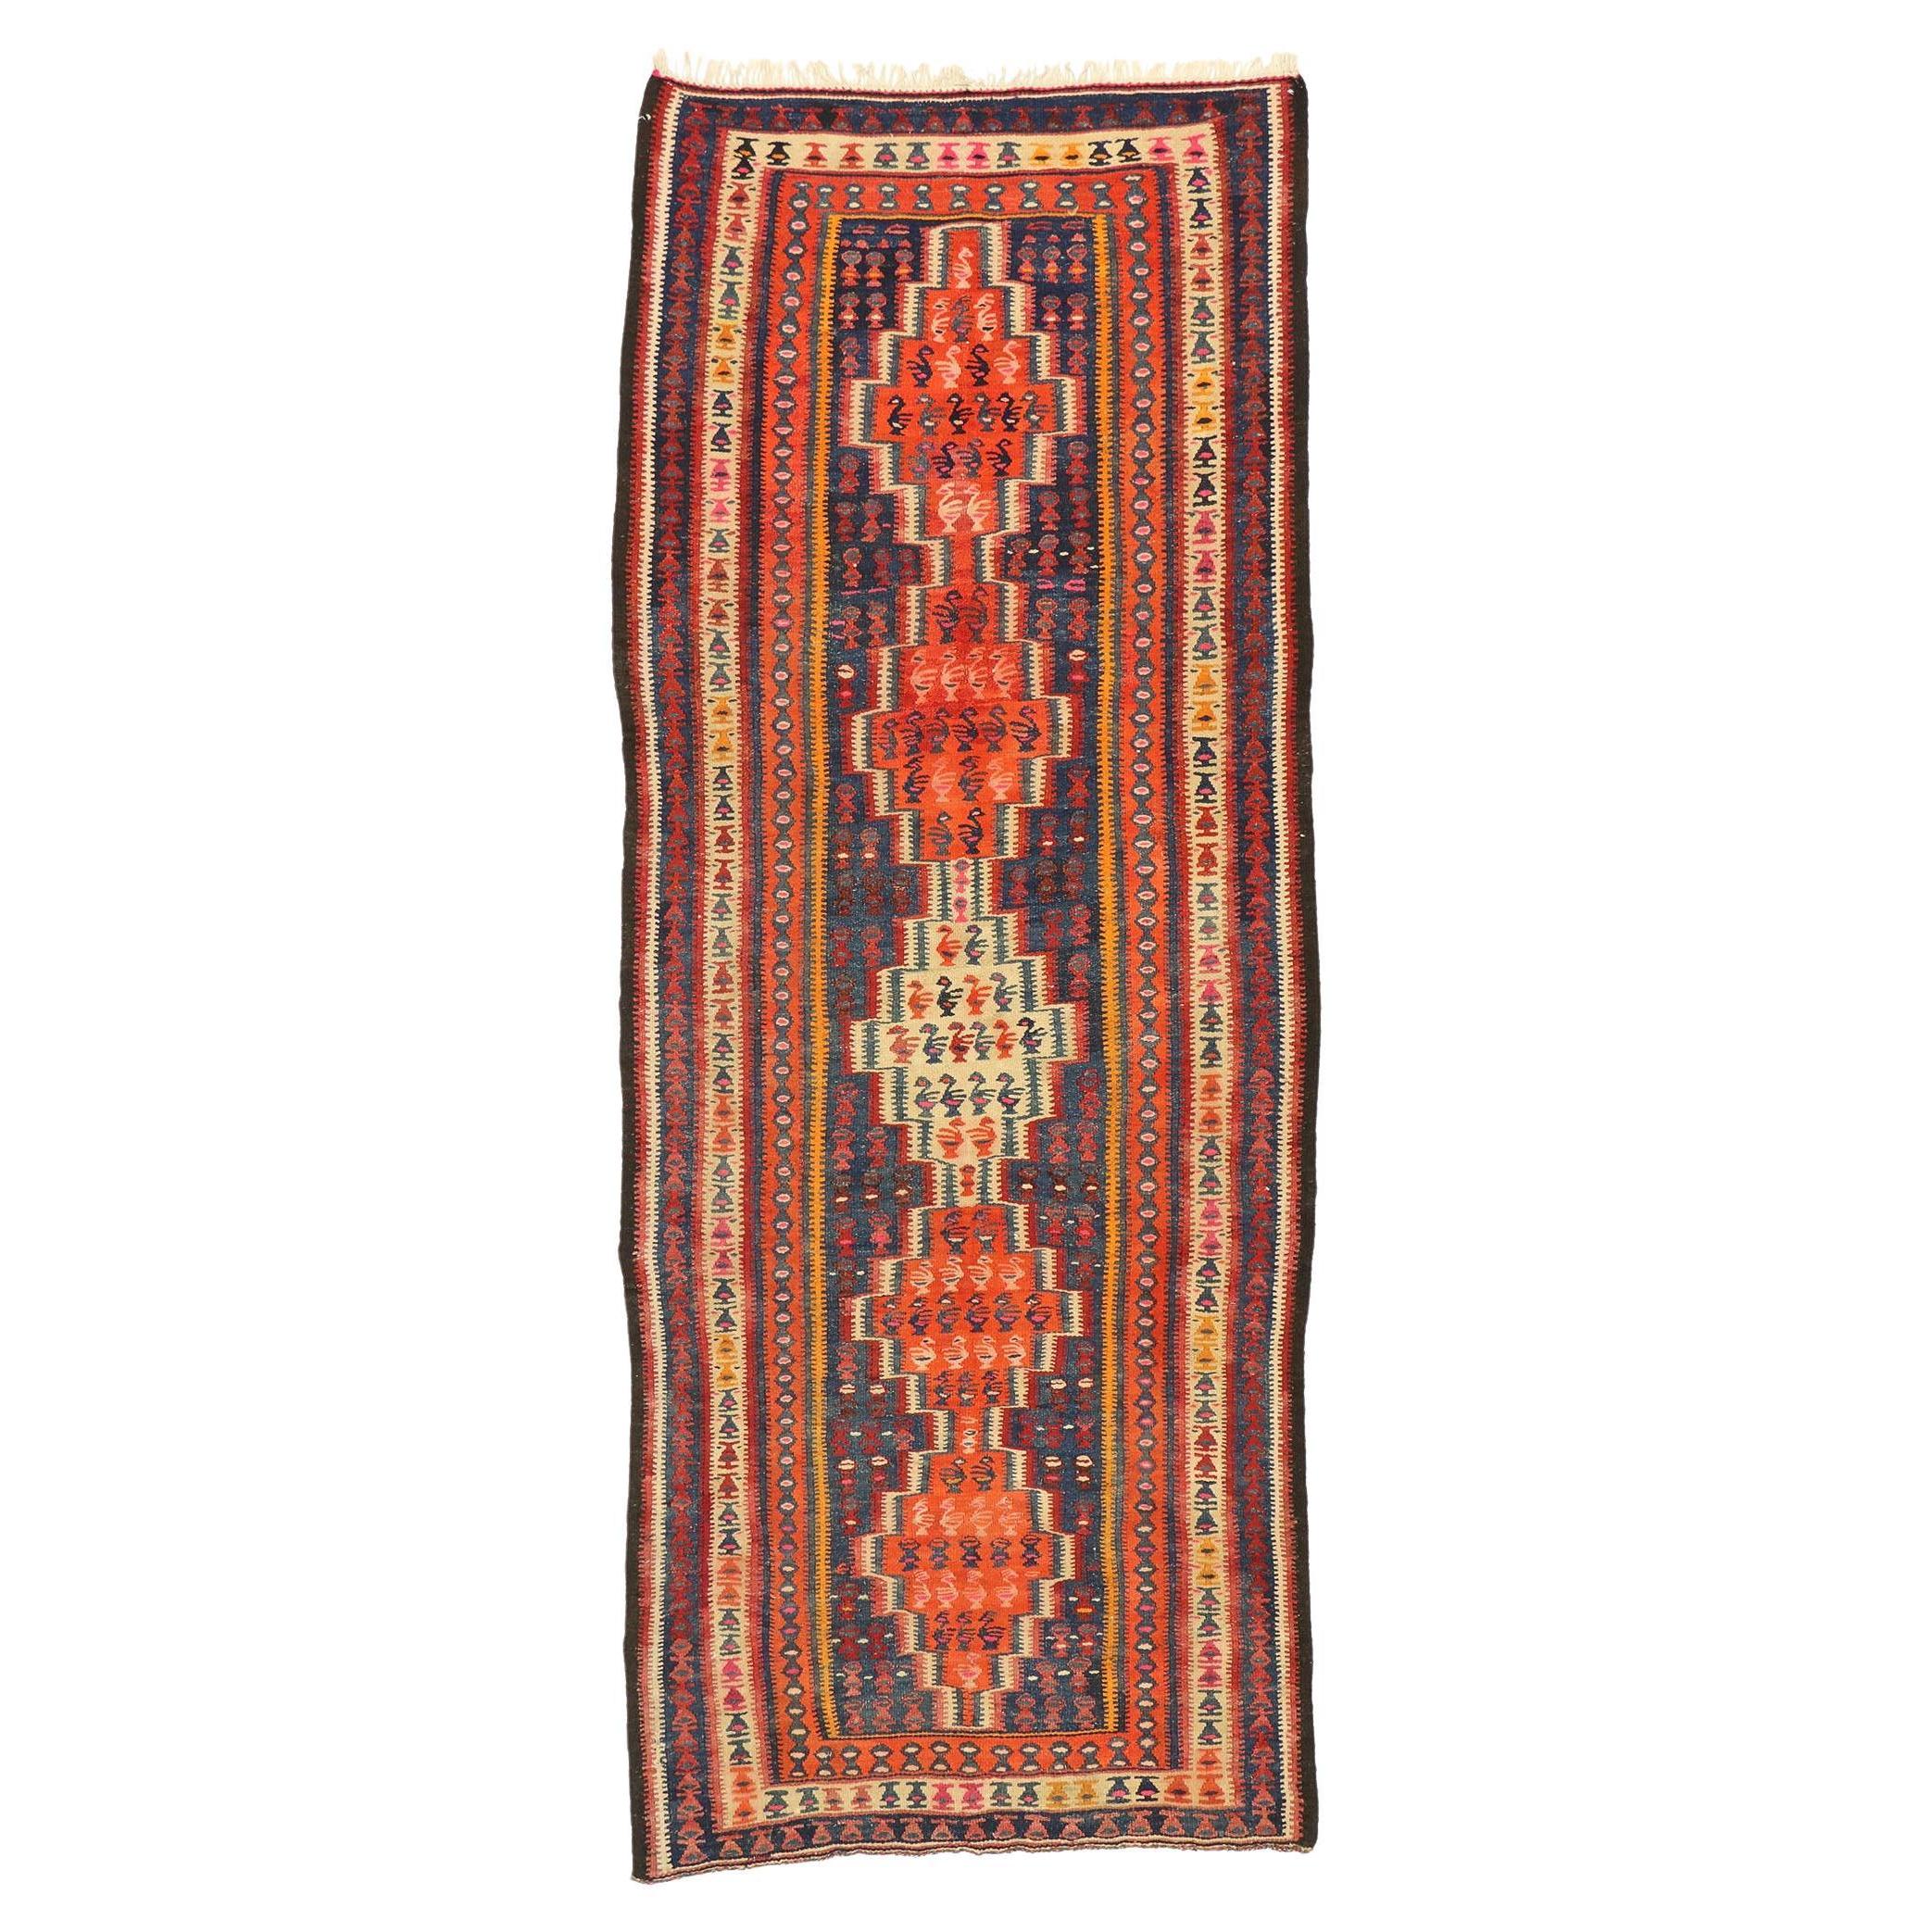  Vintage Turkish Tribal Flatweave Carpet For Sale